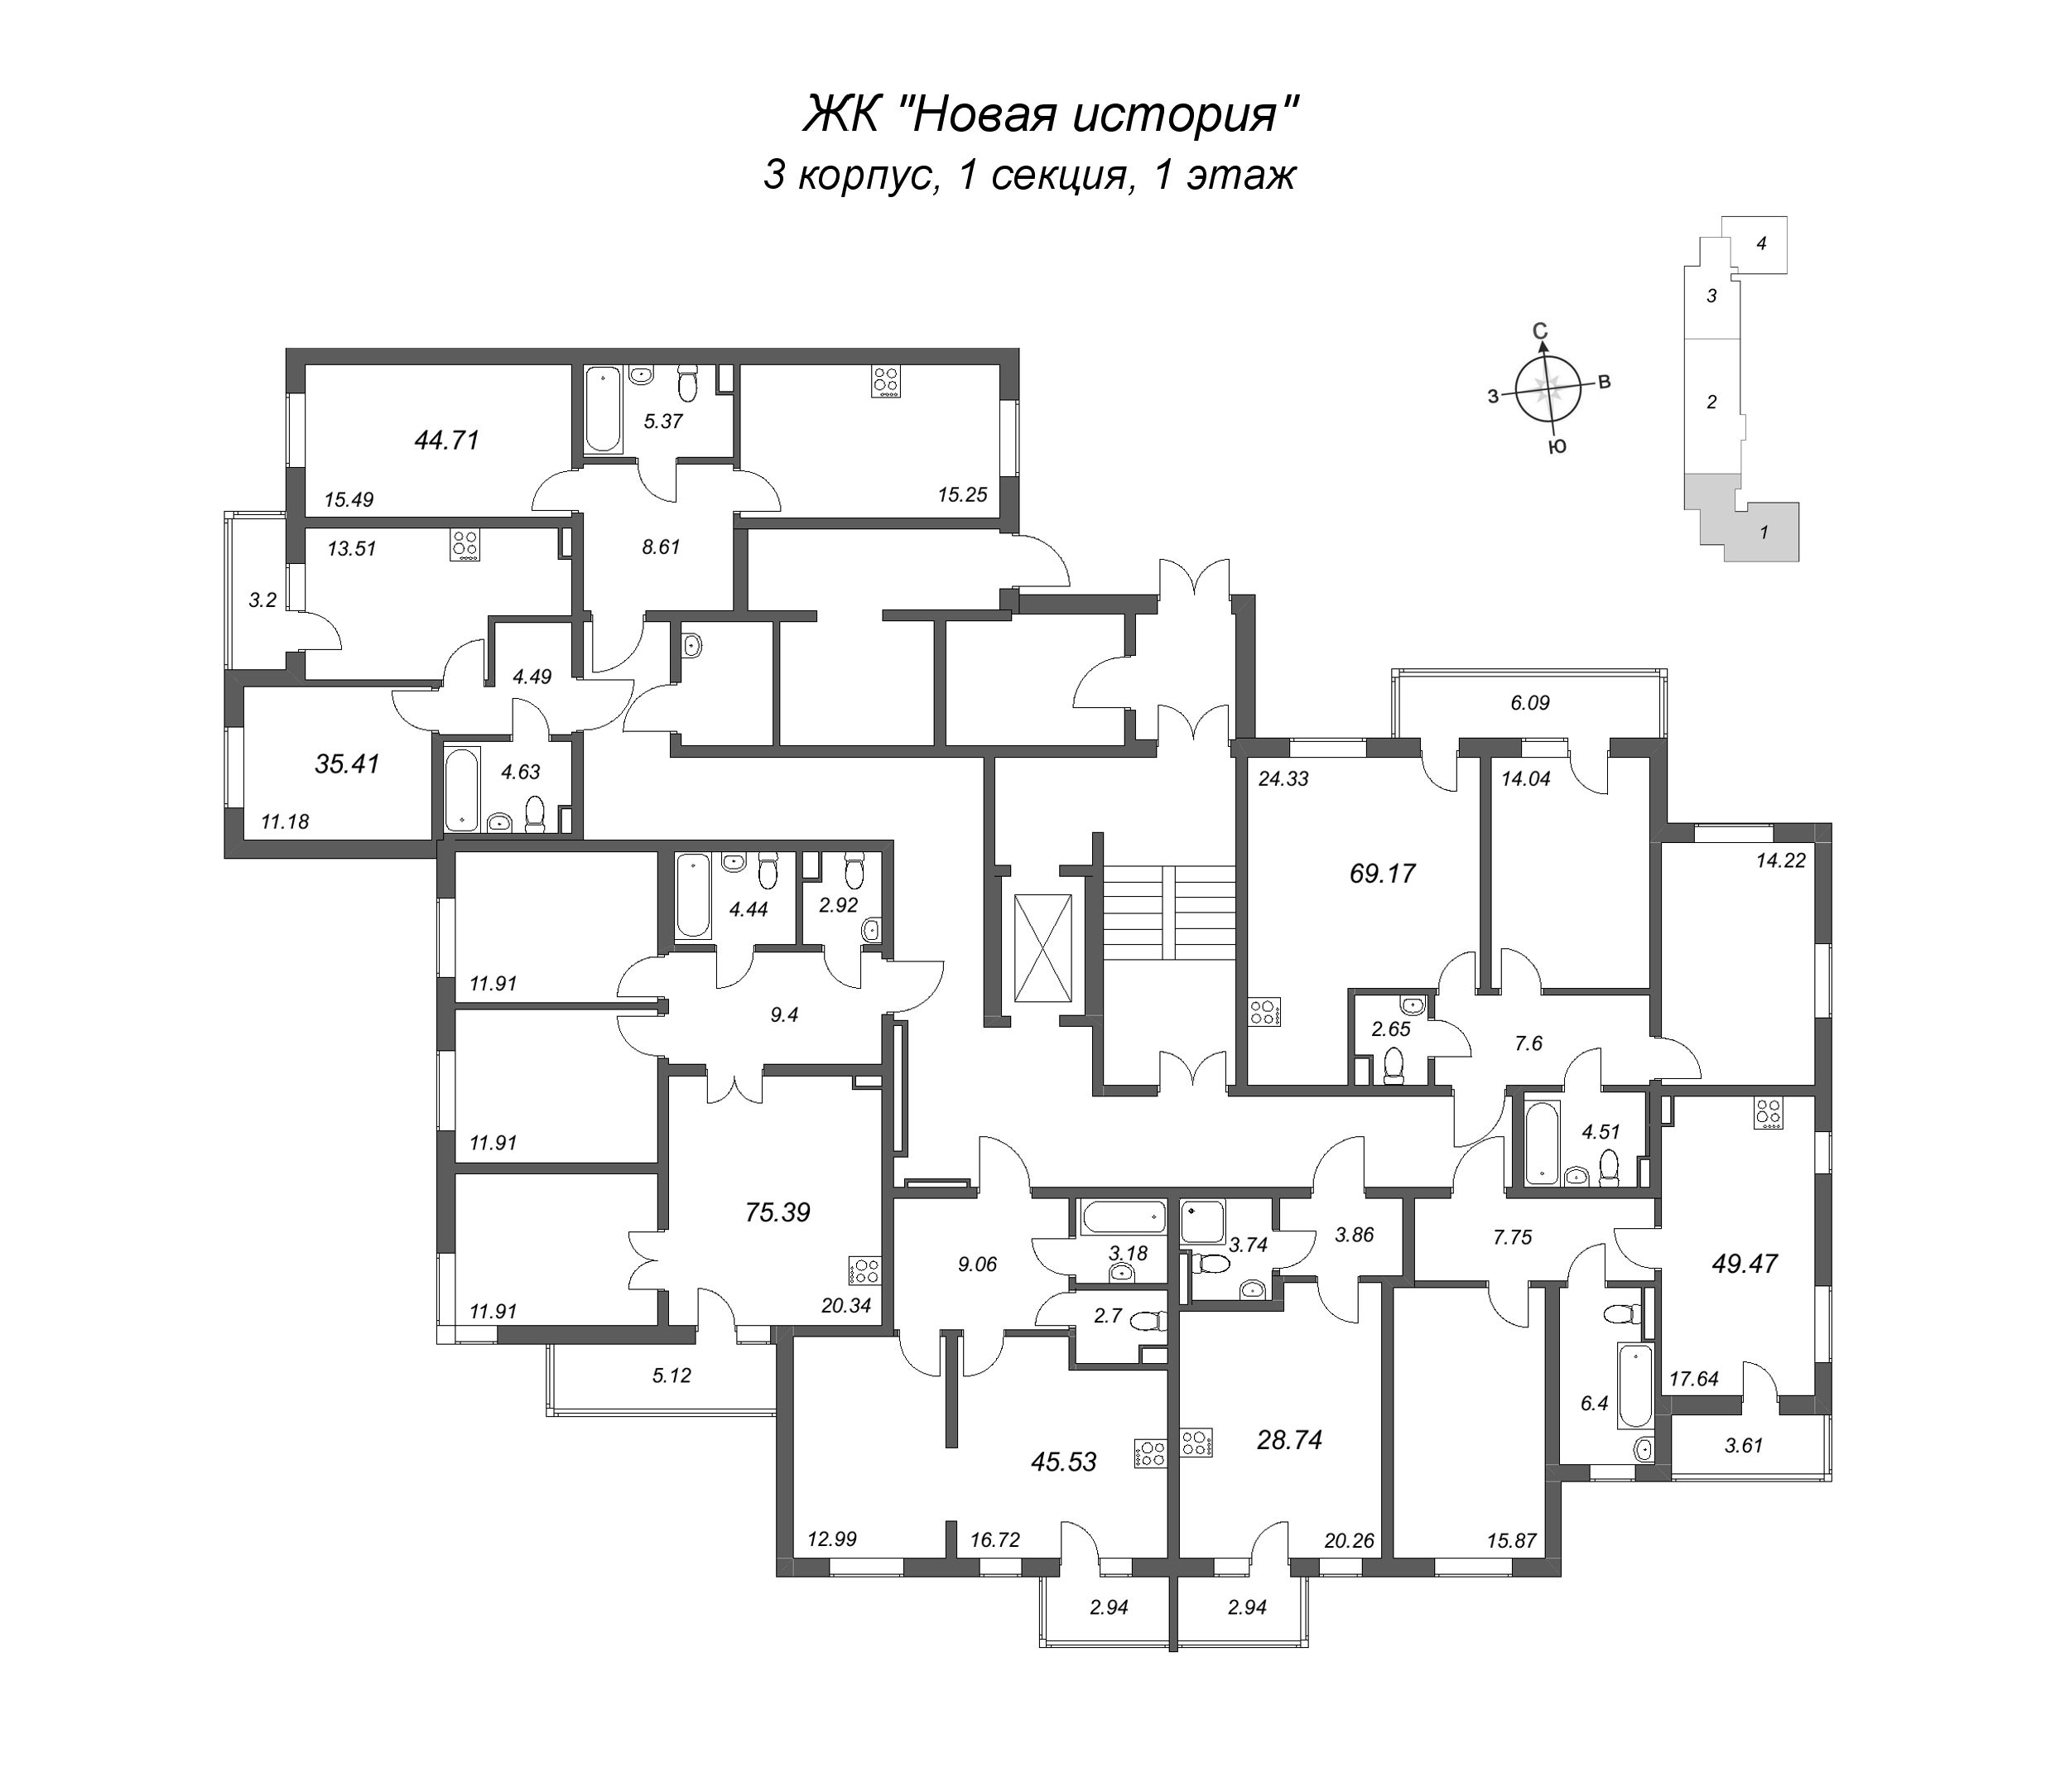 4-комнатная (Евро) квартира, 75.39 м² - планировка этажа